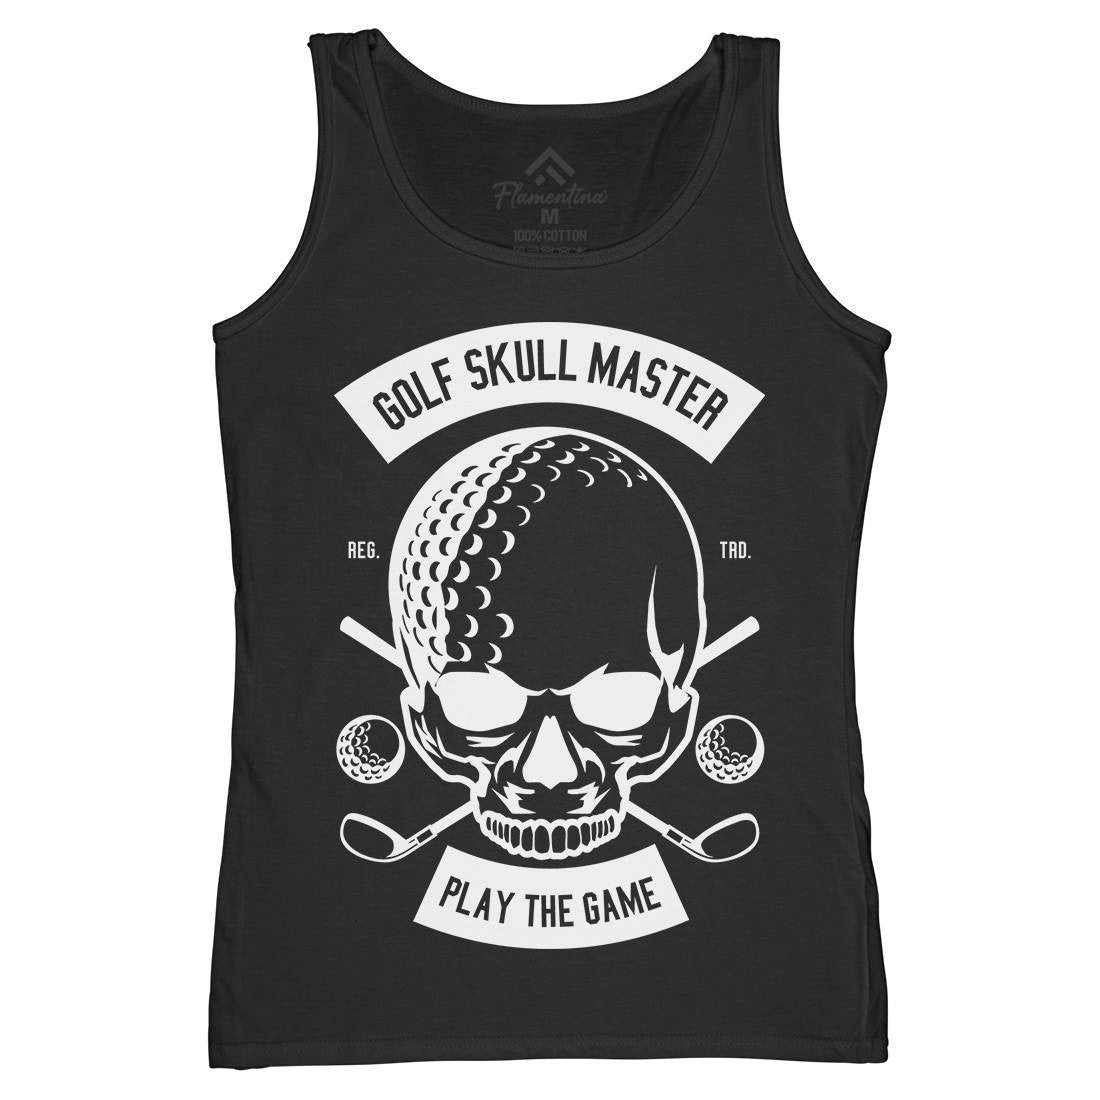 Golf Skull Master Womens Organic Tank Top Vest Sport B548